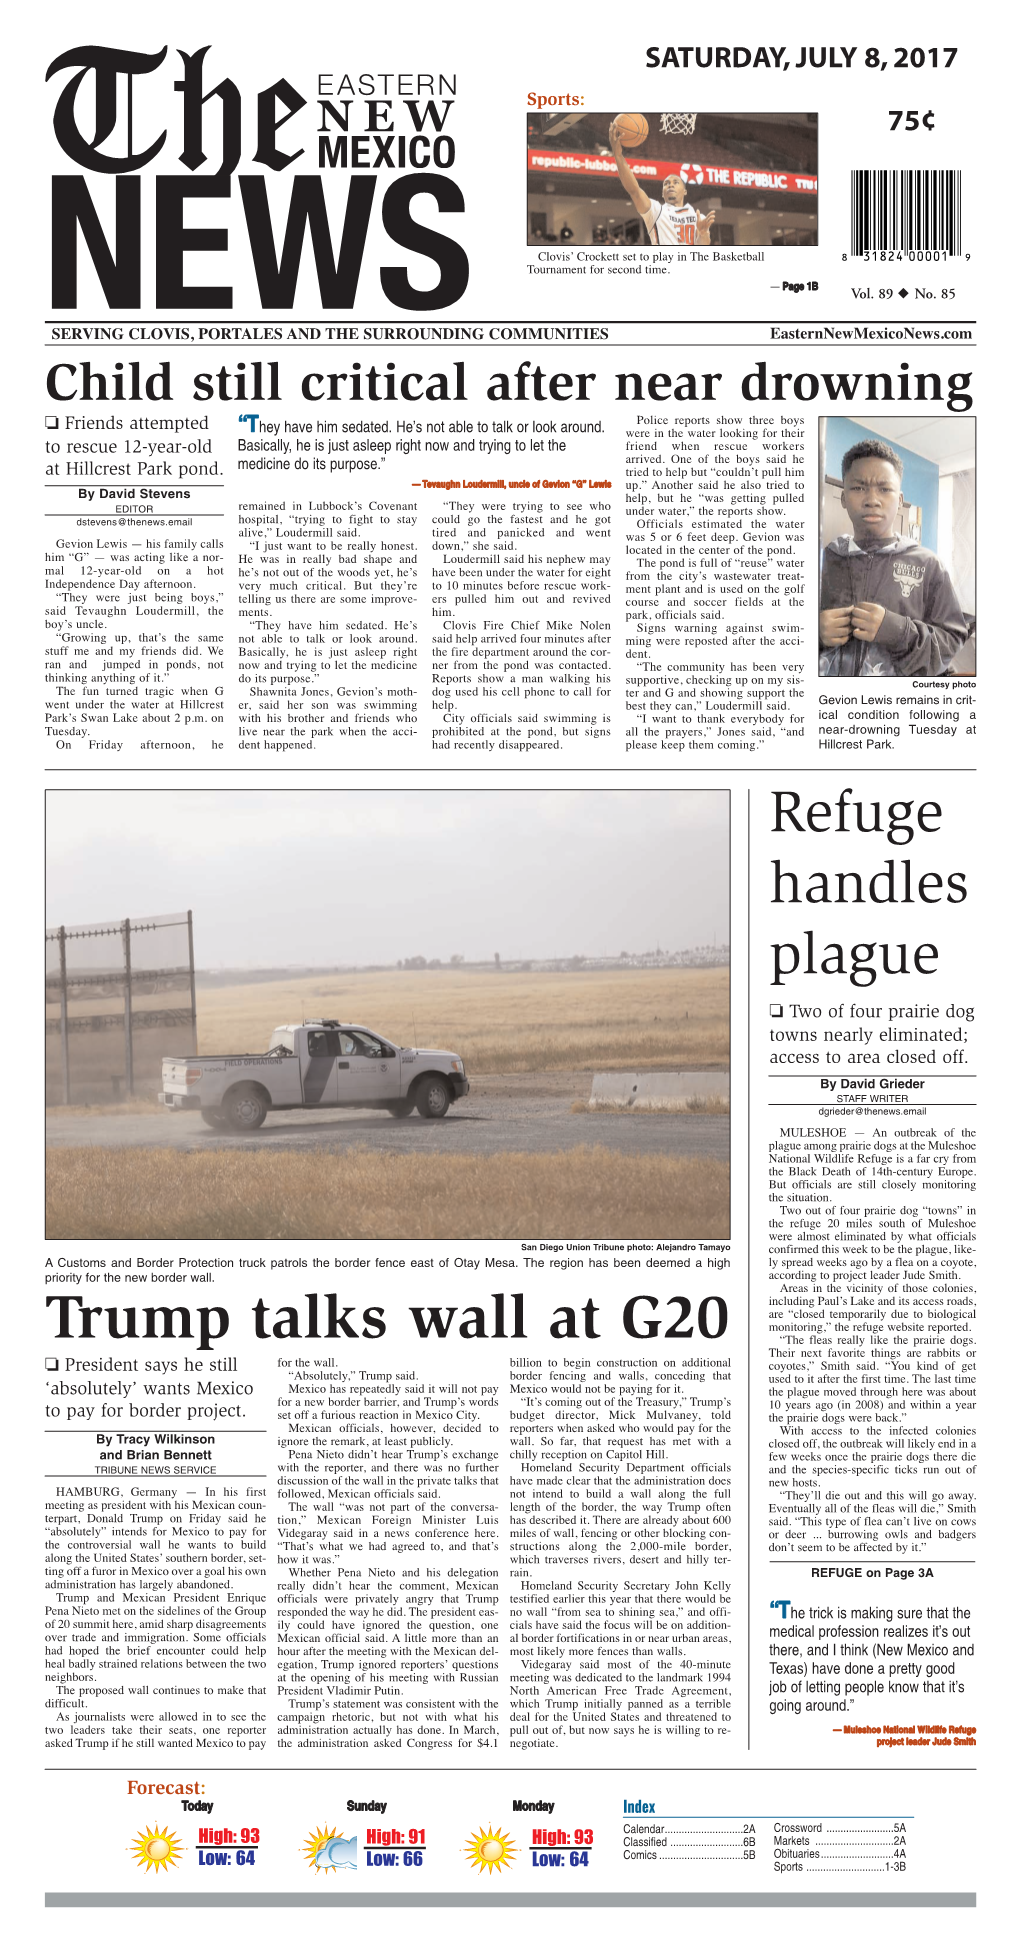 Trump Talks Wall at G20 “The Fleas Really Like the Prairie Dogs